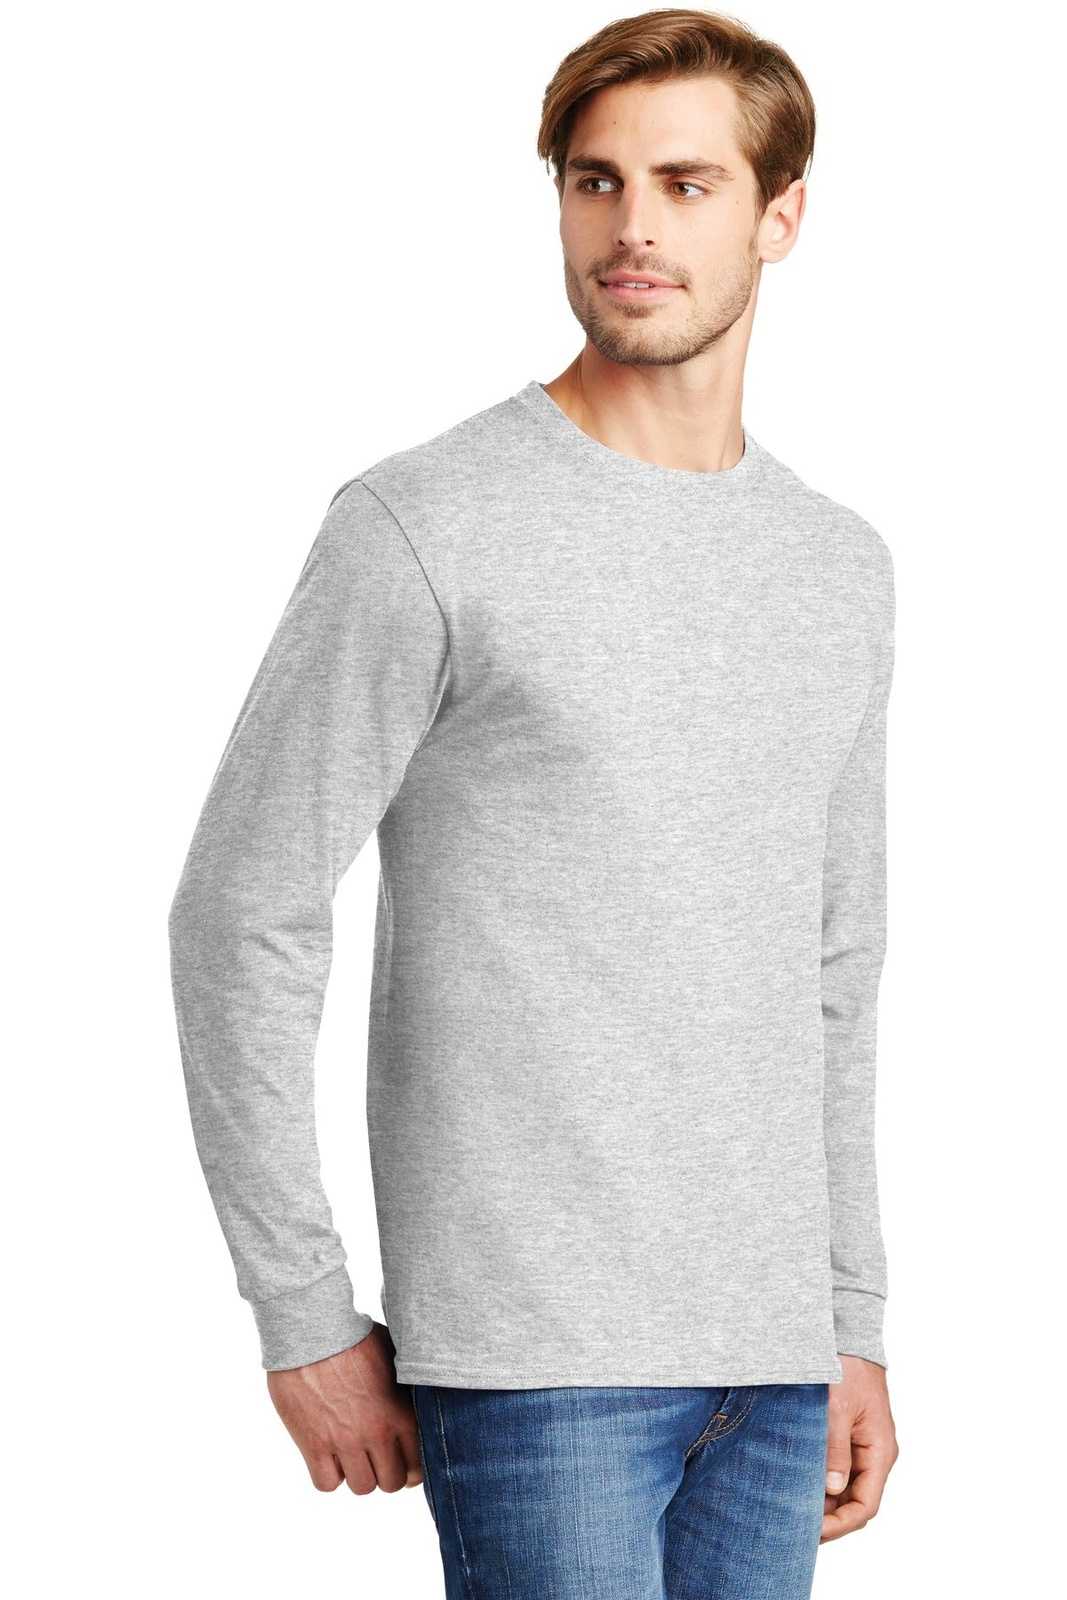 Hanes 5586 Tagless 100% Cotton Long Sleeve T-Shirt - Ash - HIT a Double